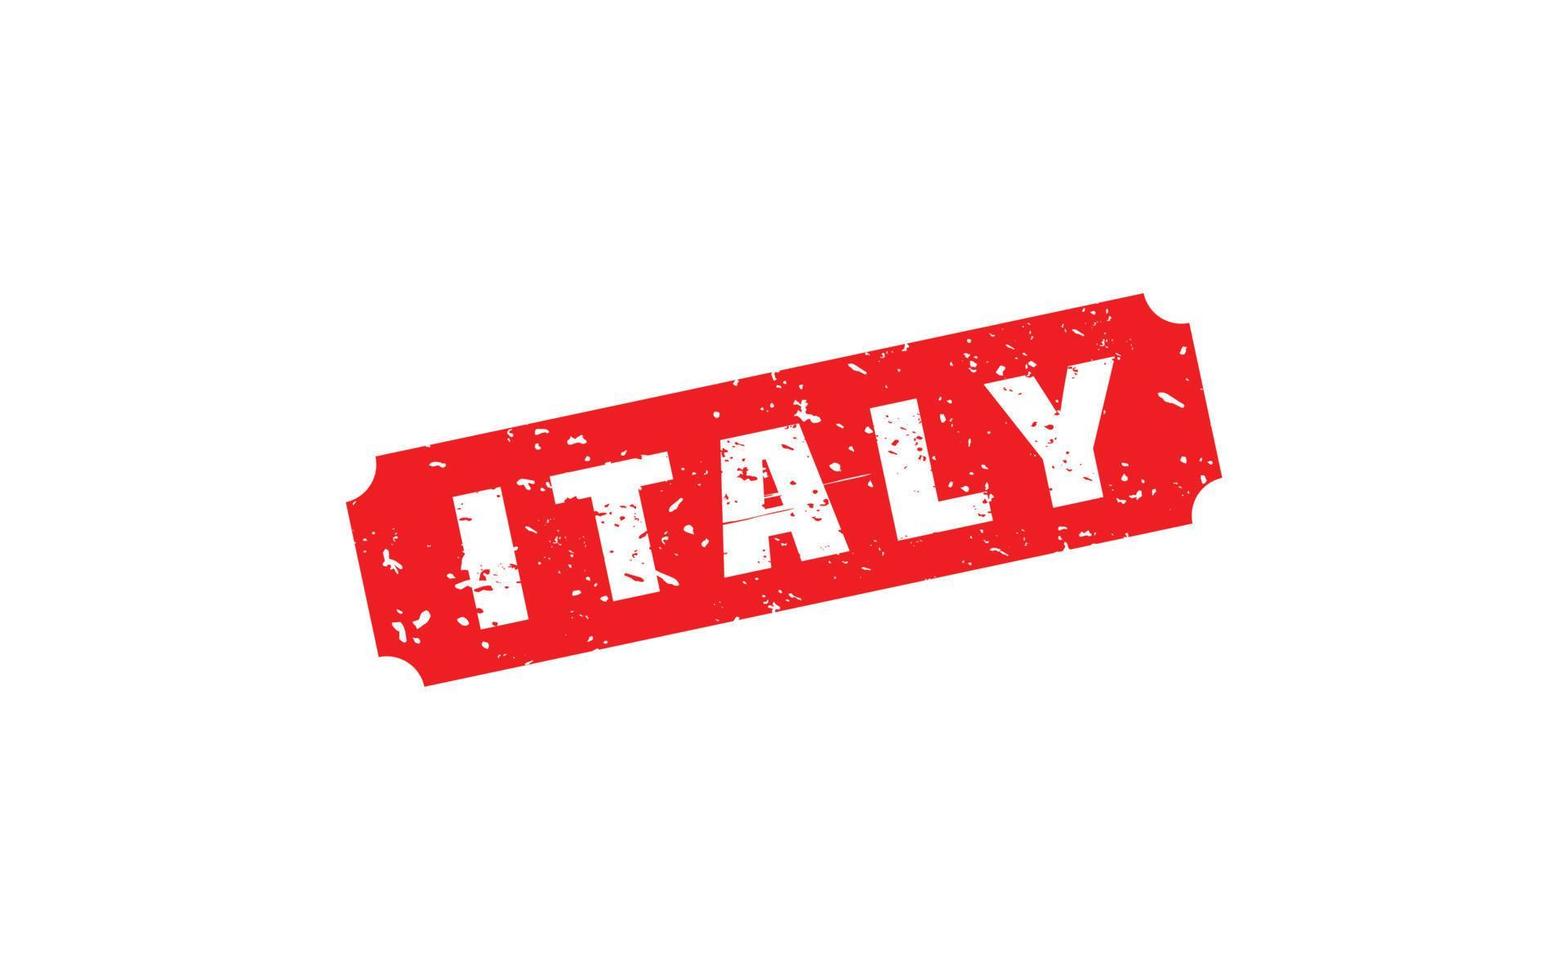 goma de sello de italia con estilo grunge sobre fondo blanco vector